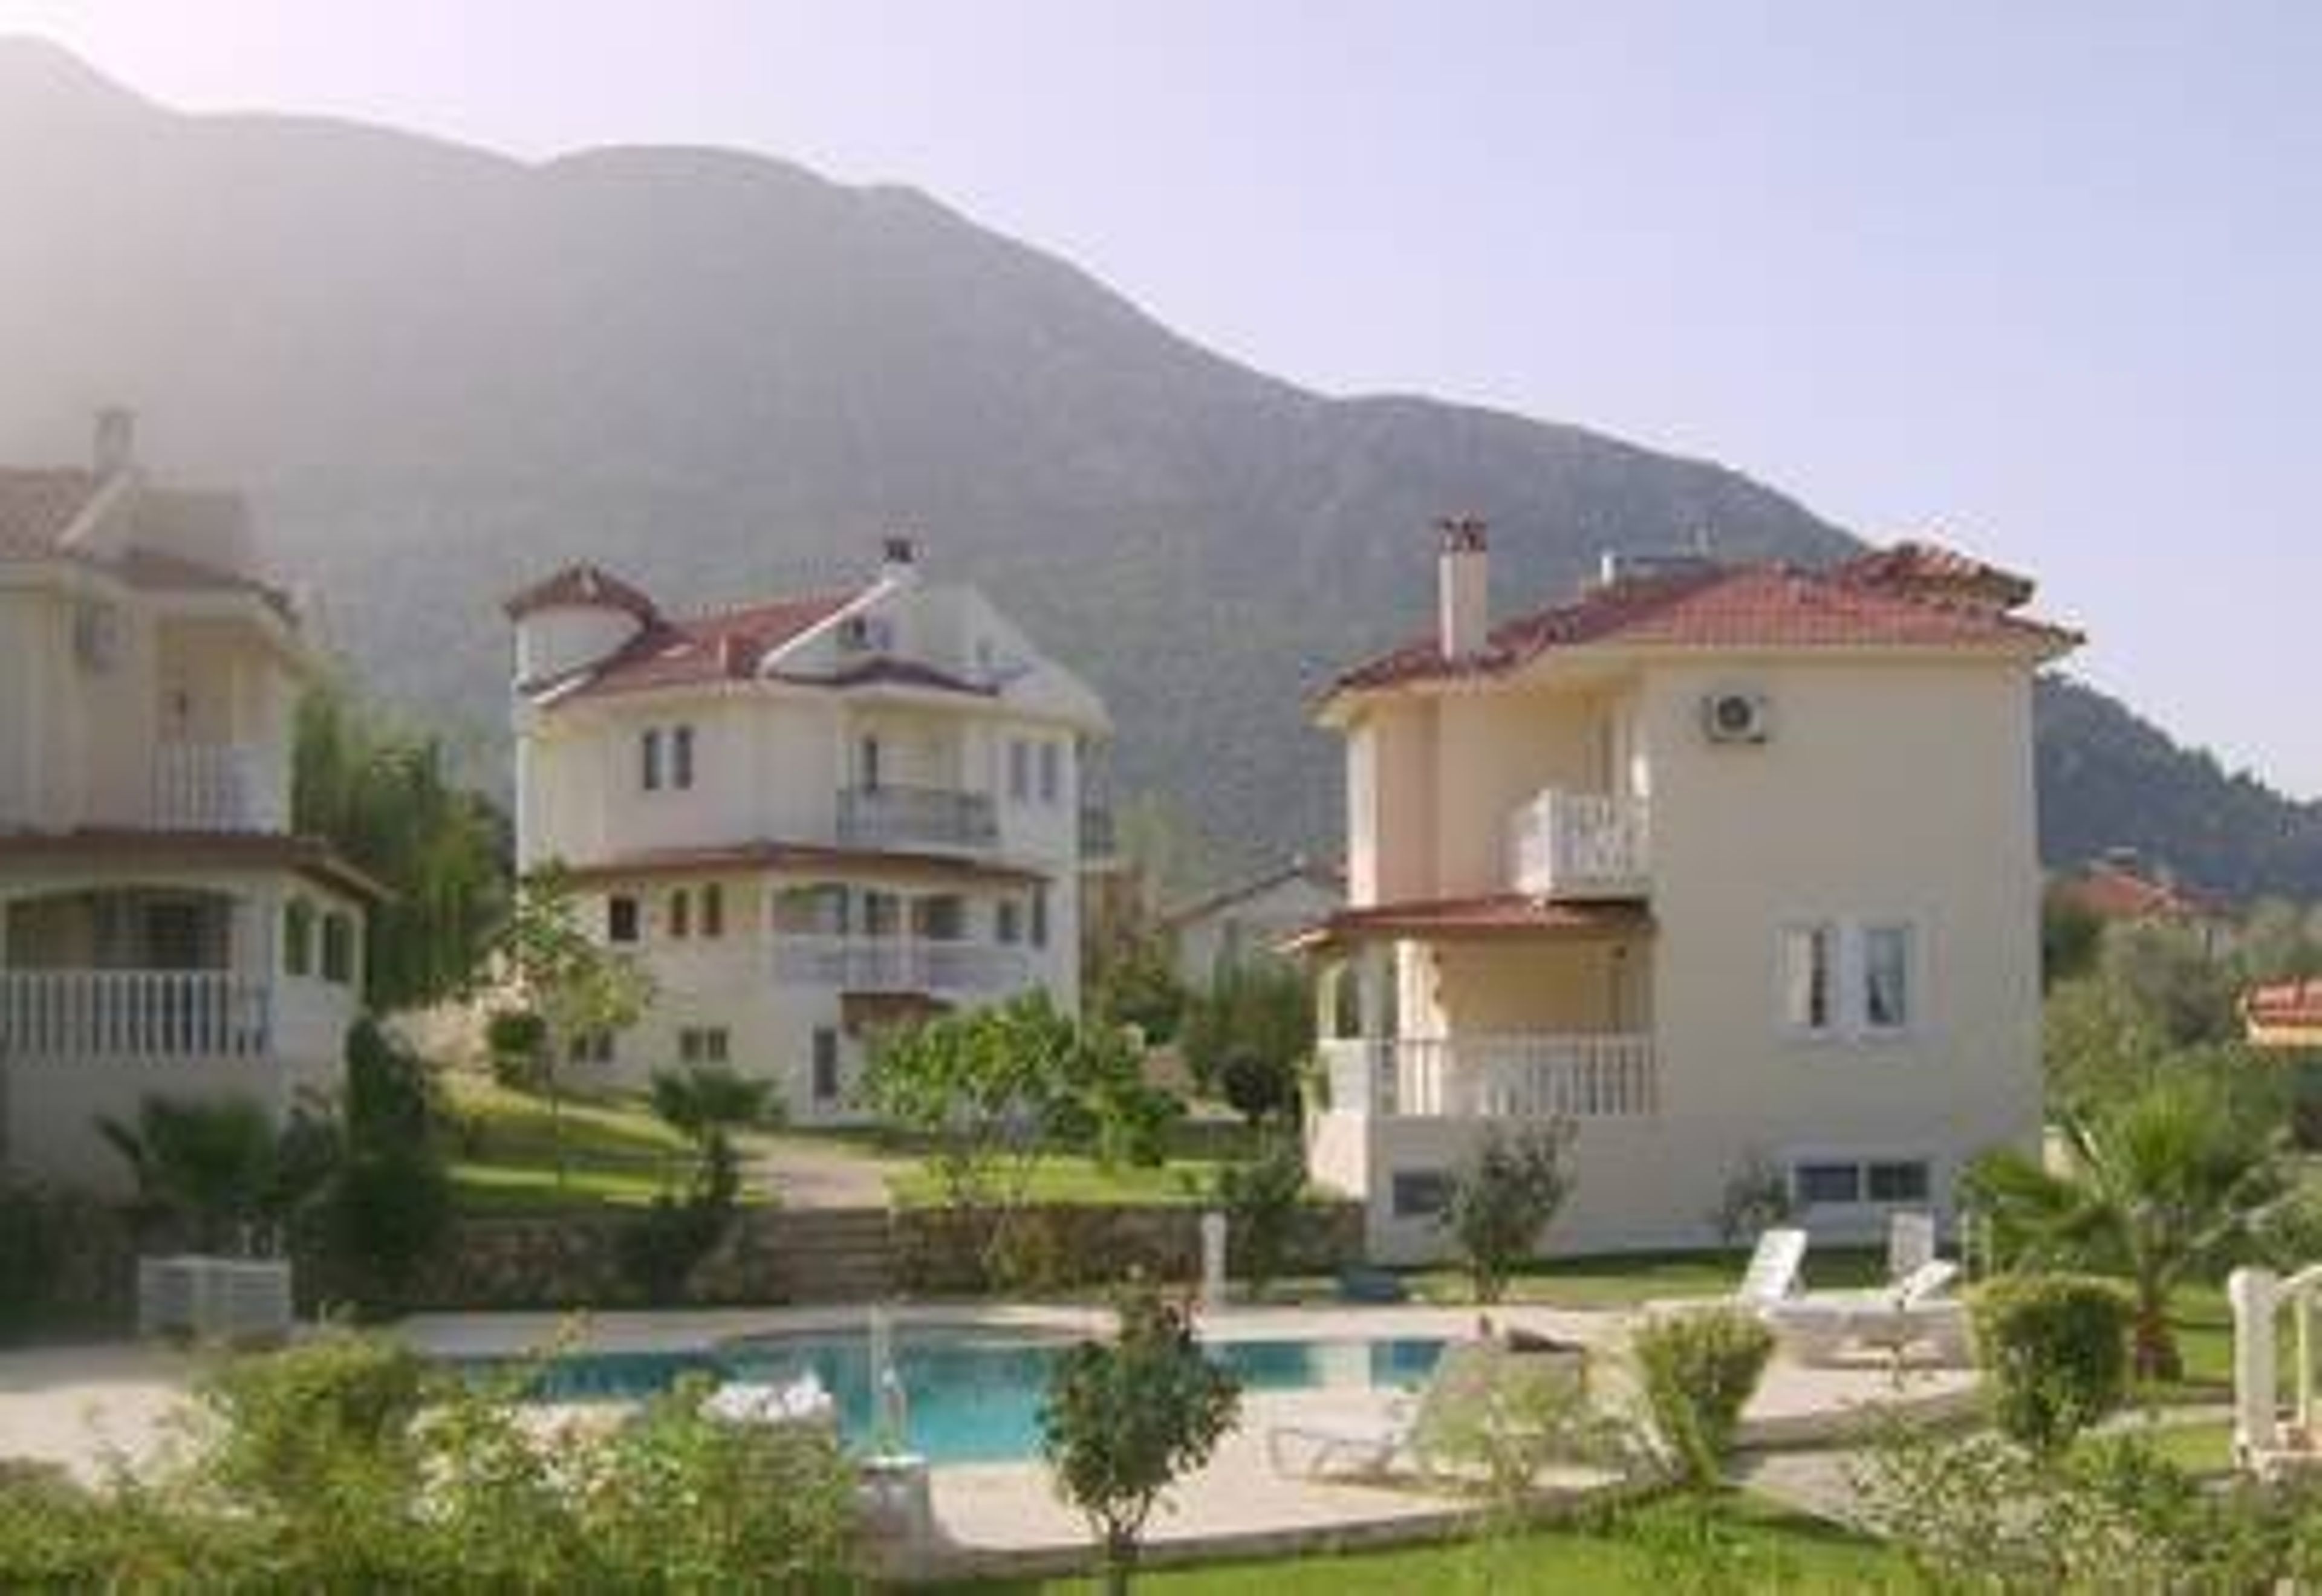 Villa - viewed across the pool